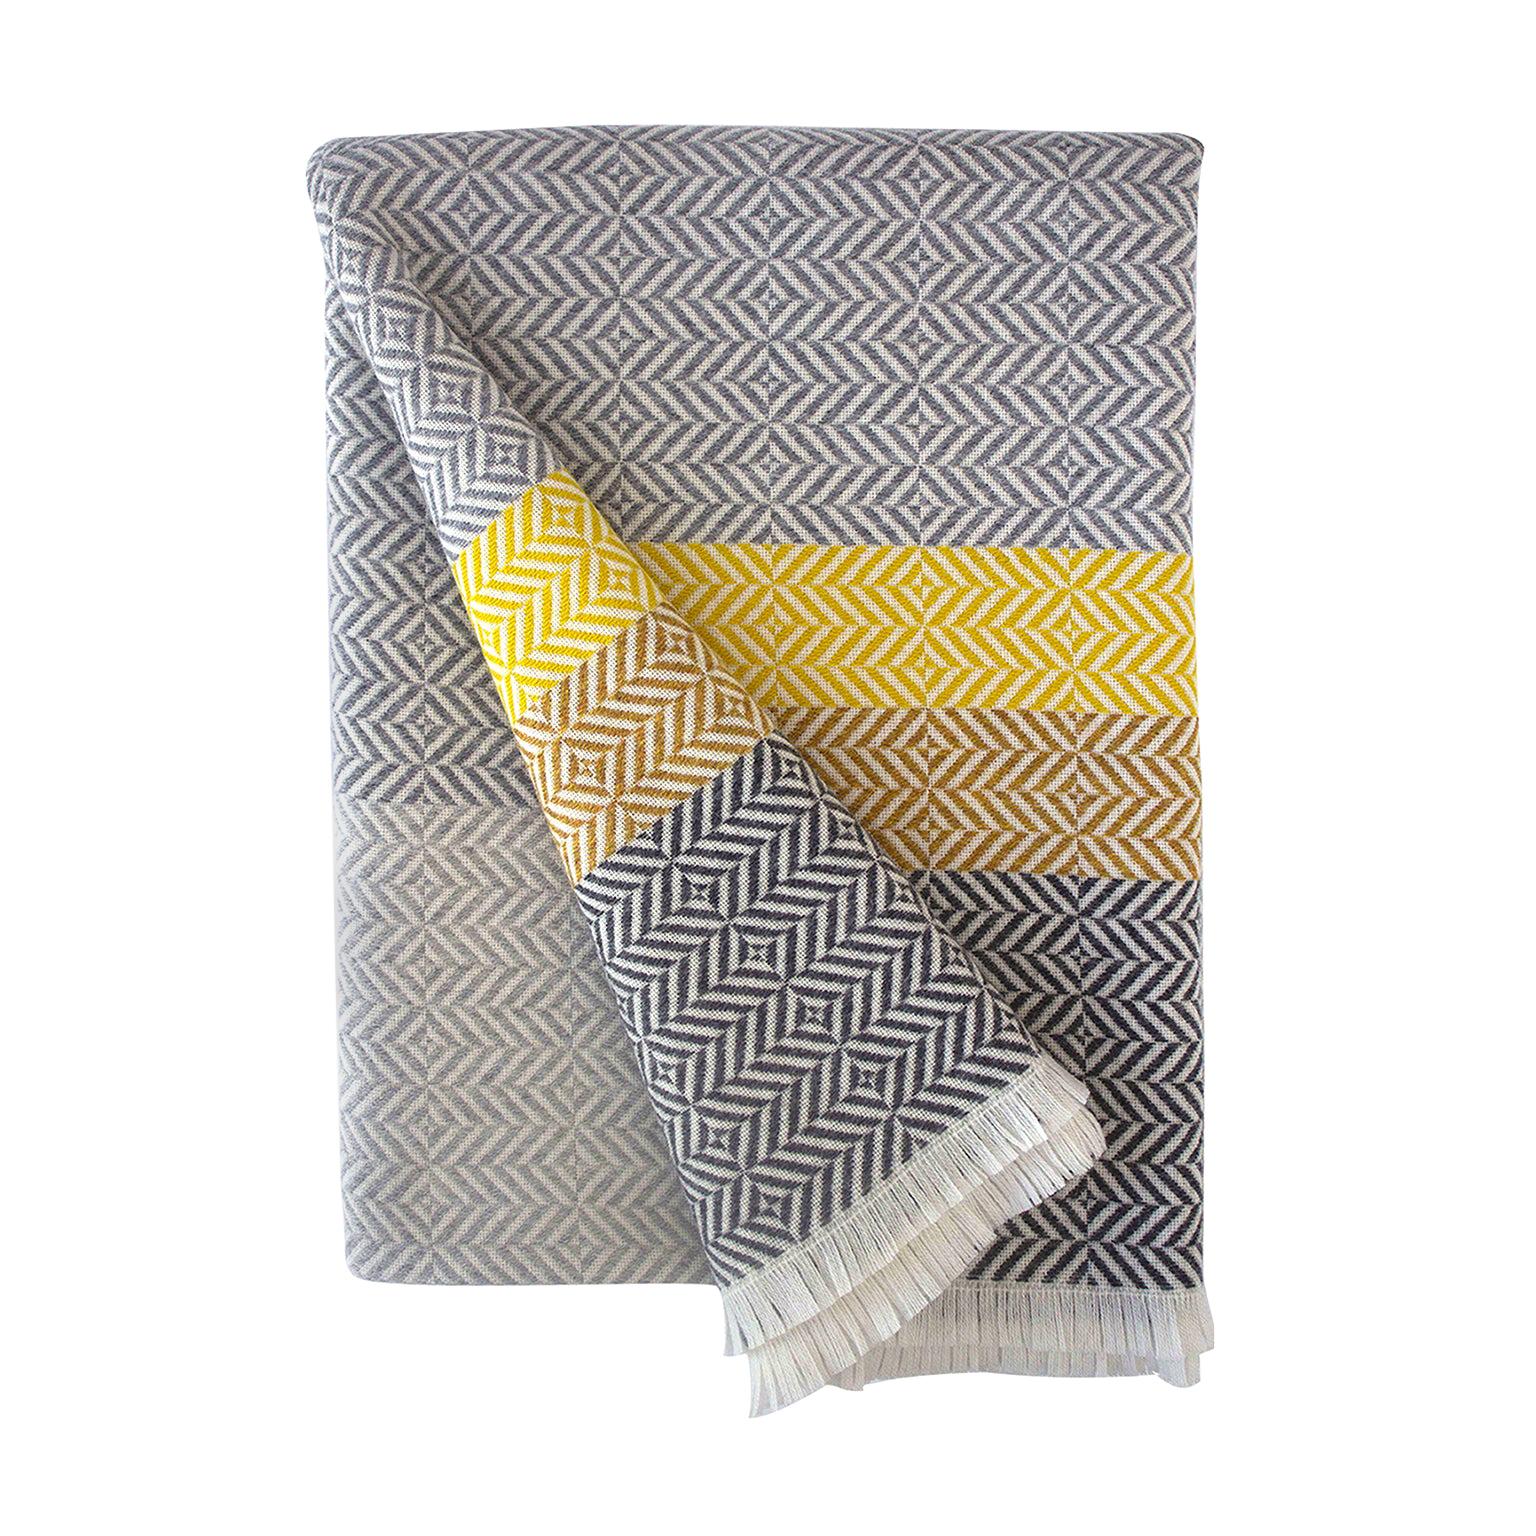 'Uccle' Block Geometric Woven Merino Wool Throw, Piccalilli Yellow/Greys